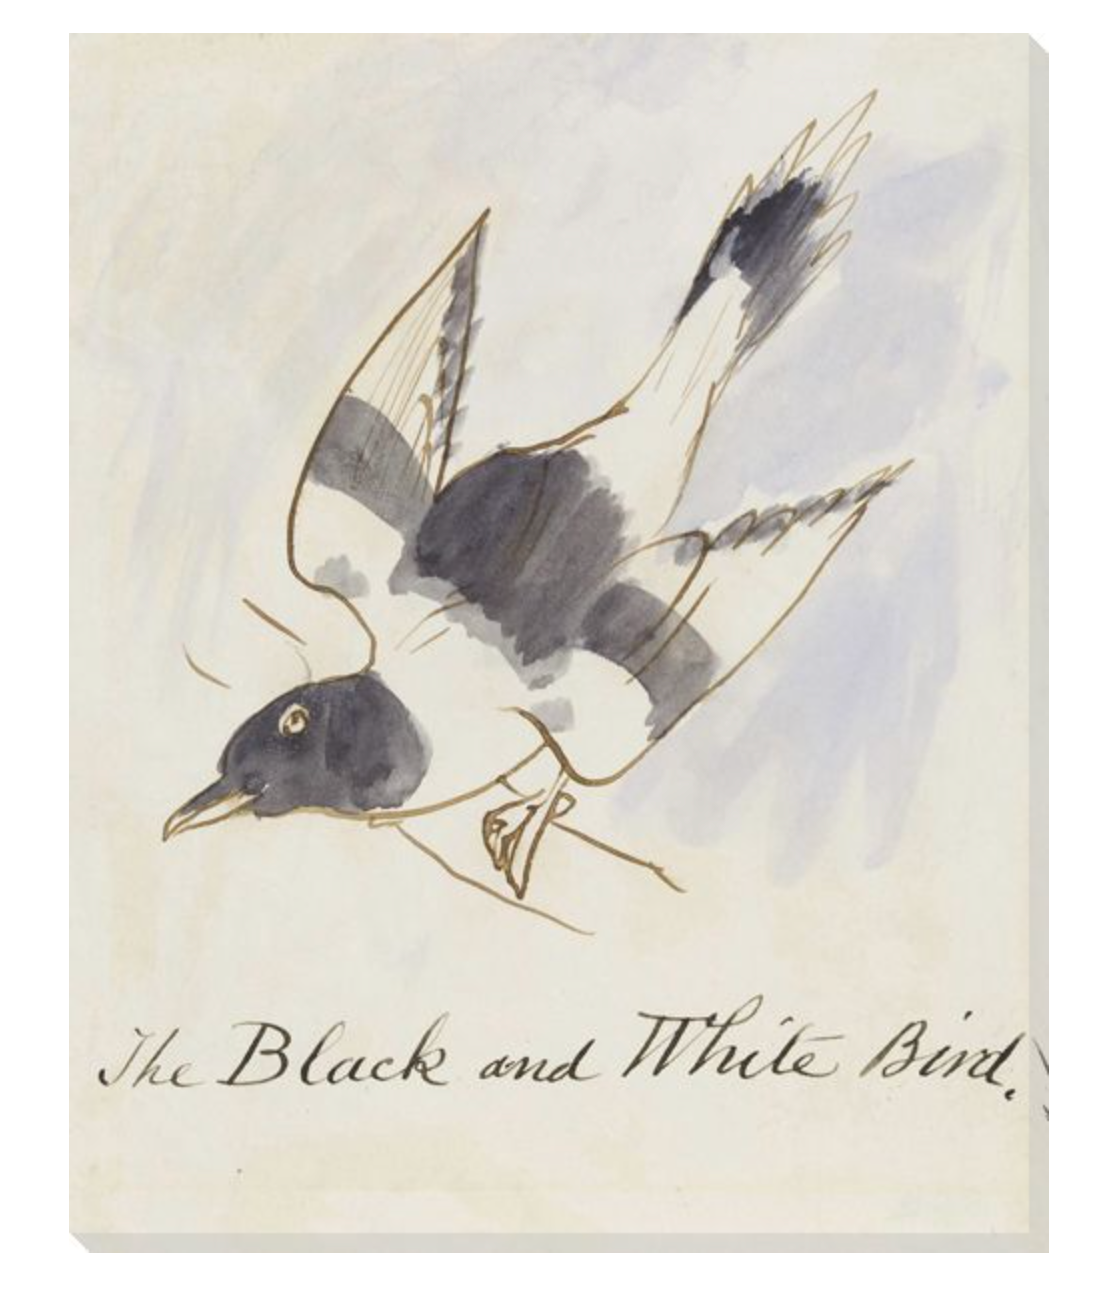 THE BLACK AND WHITE BIRD